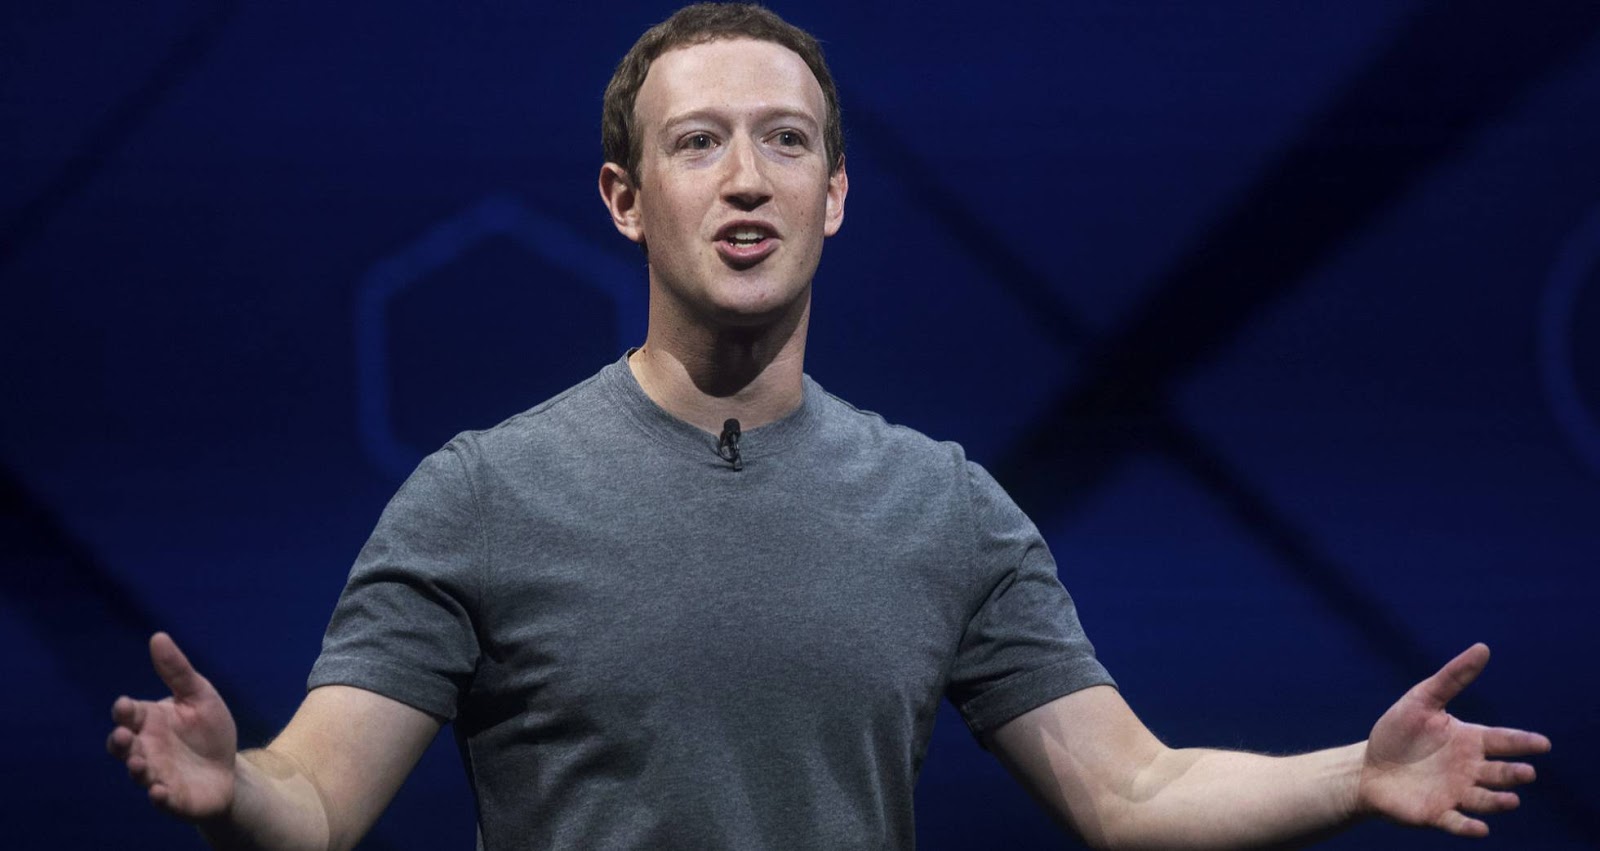 Ejemplo de emprendedores exitosos: Mark Zuckerberg